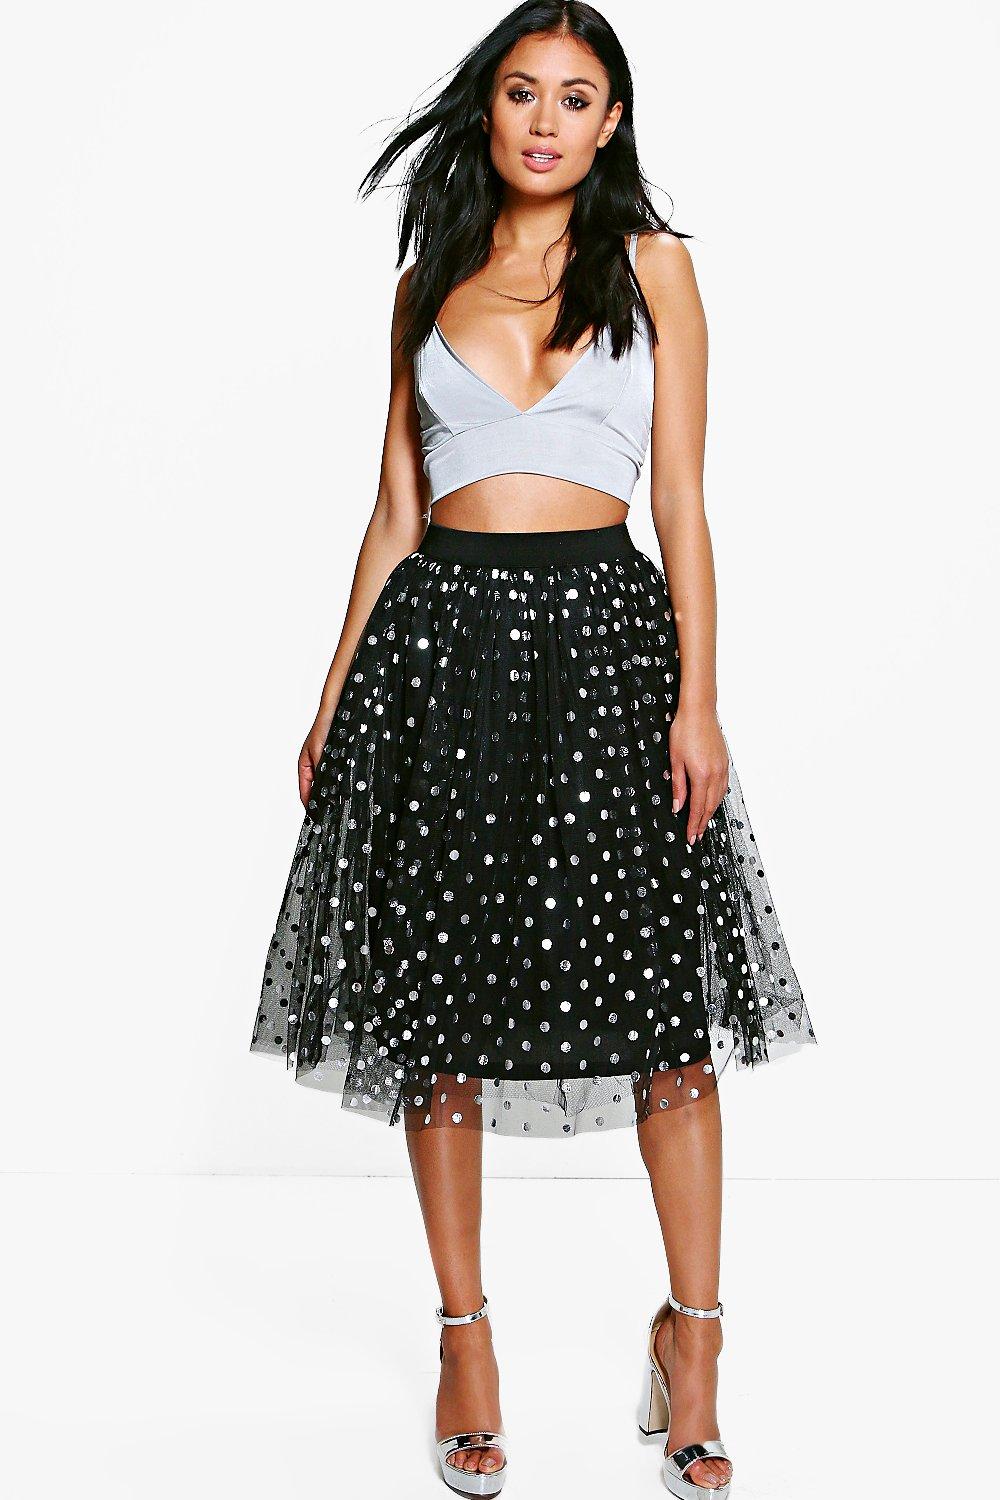 Boohoo Womens Shea Metallic Polka Dot Tulle Skirt | eBay